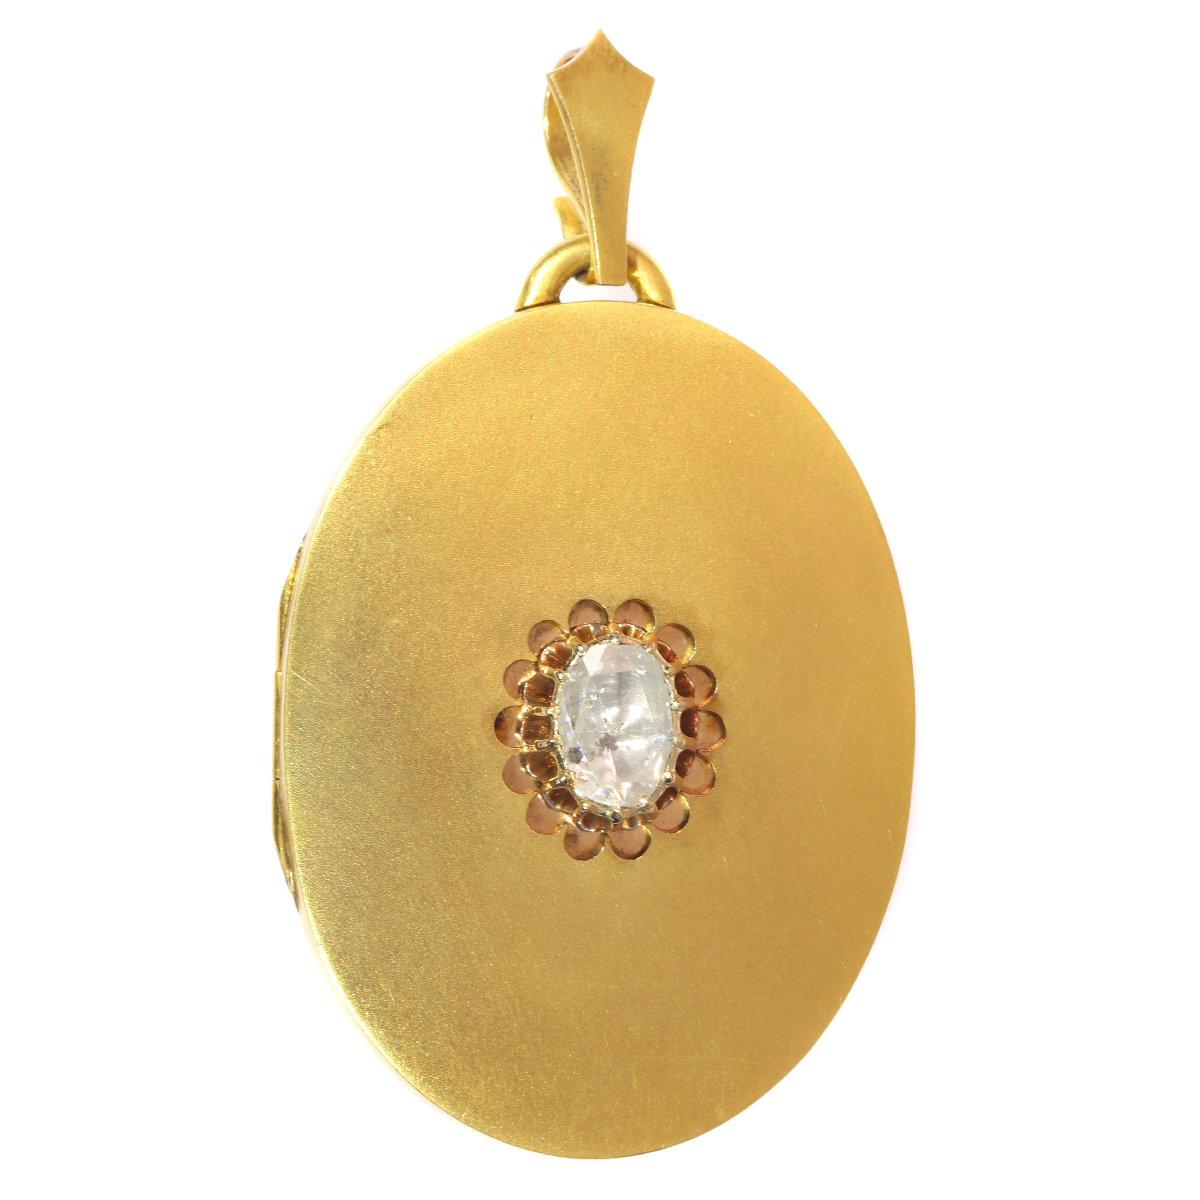 Antique Victorian locket medaillion gold pendant with big rose cut diamond